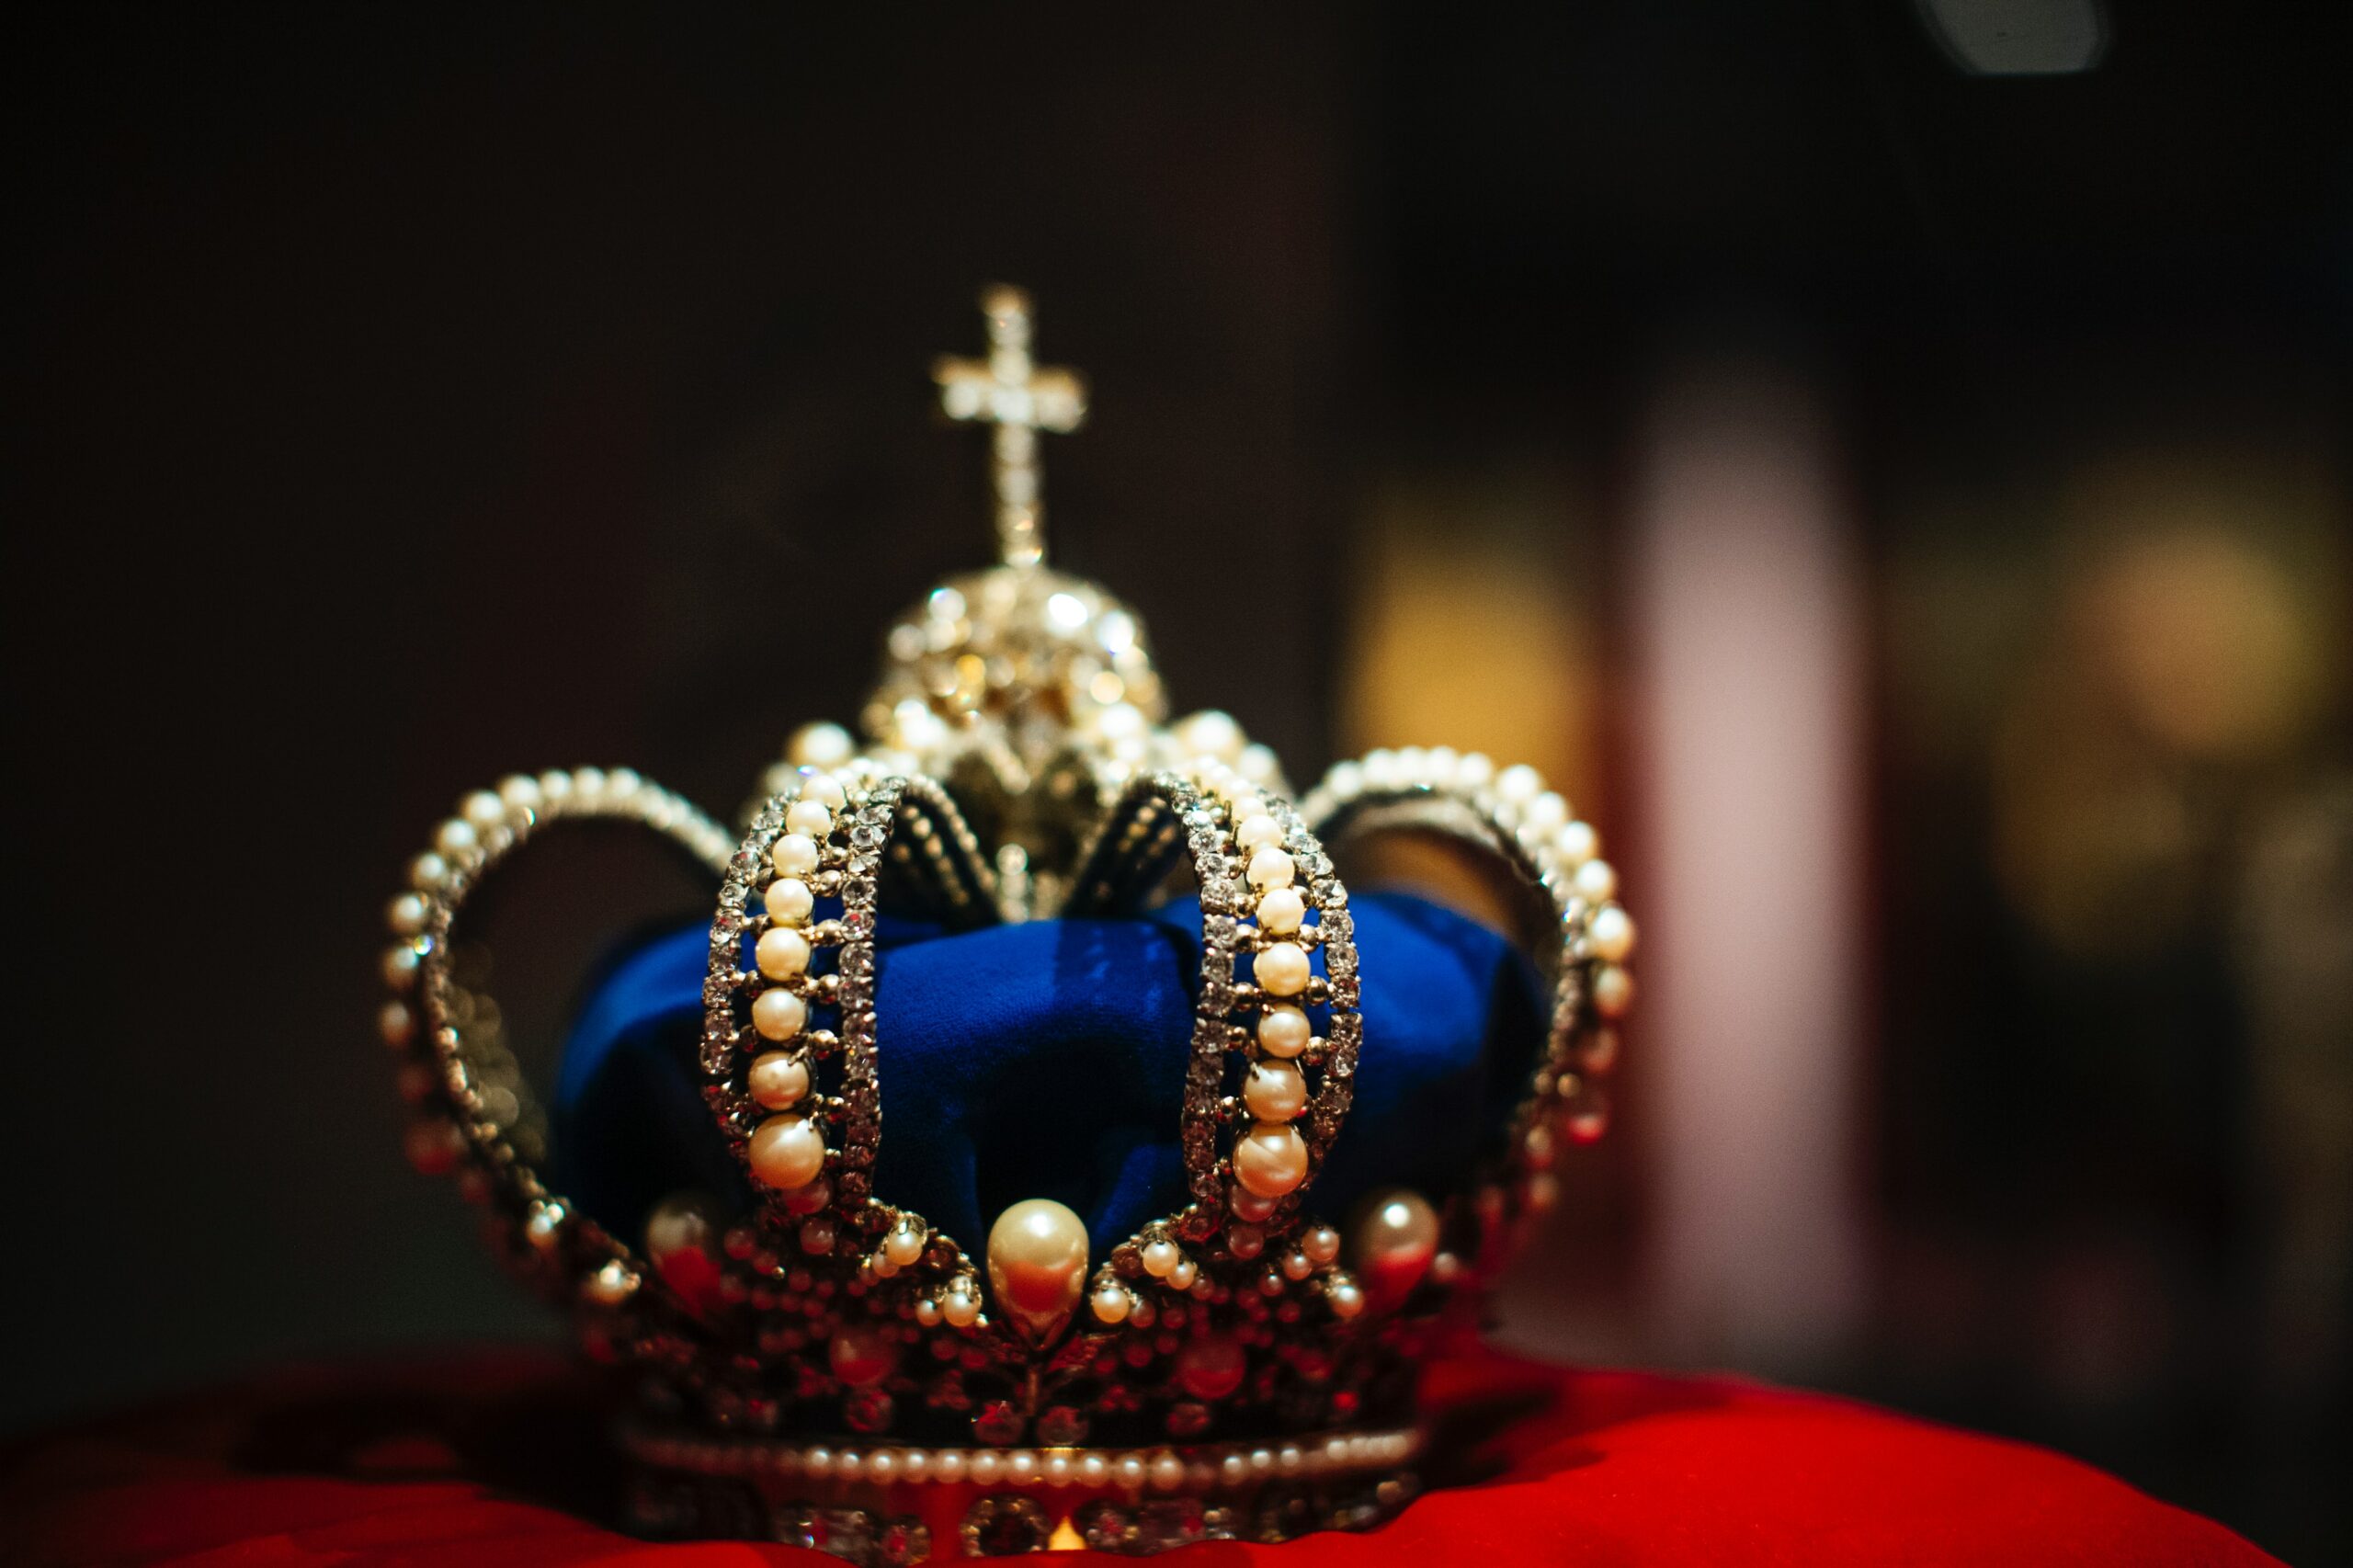 King's Coronation Annual Leave